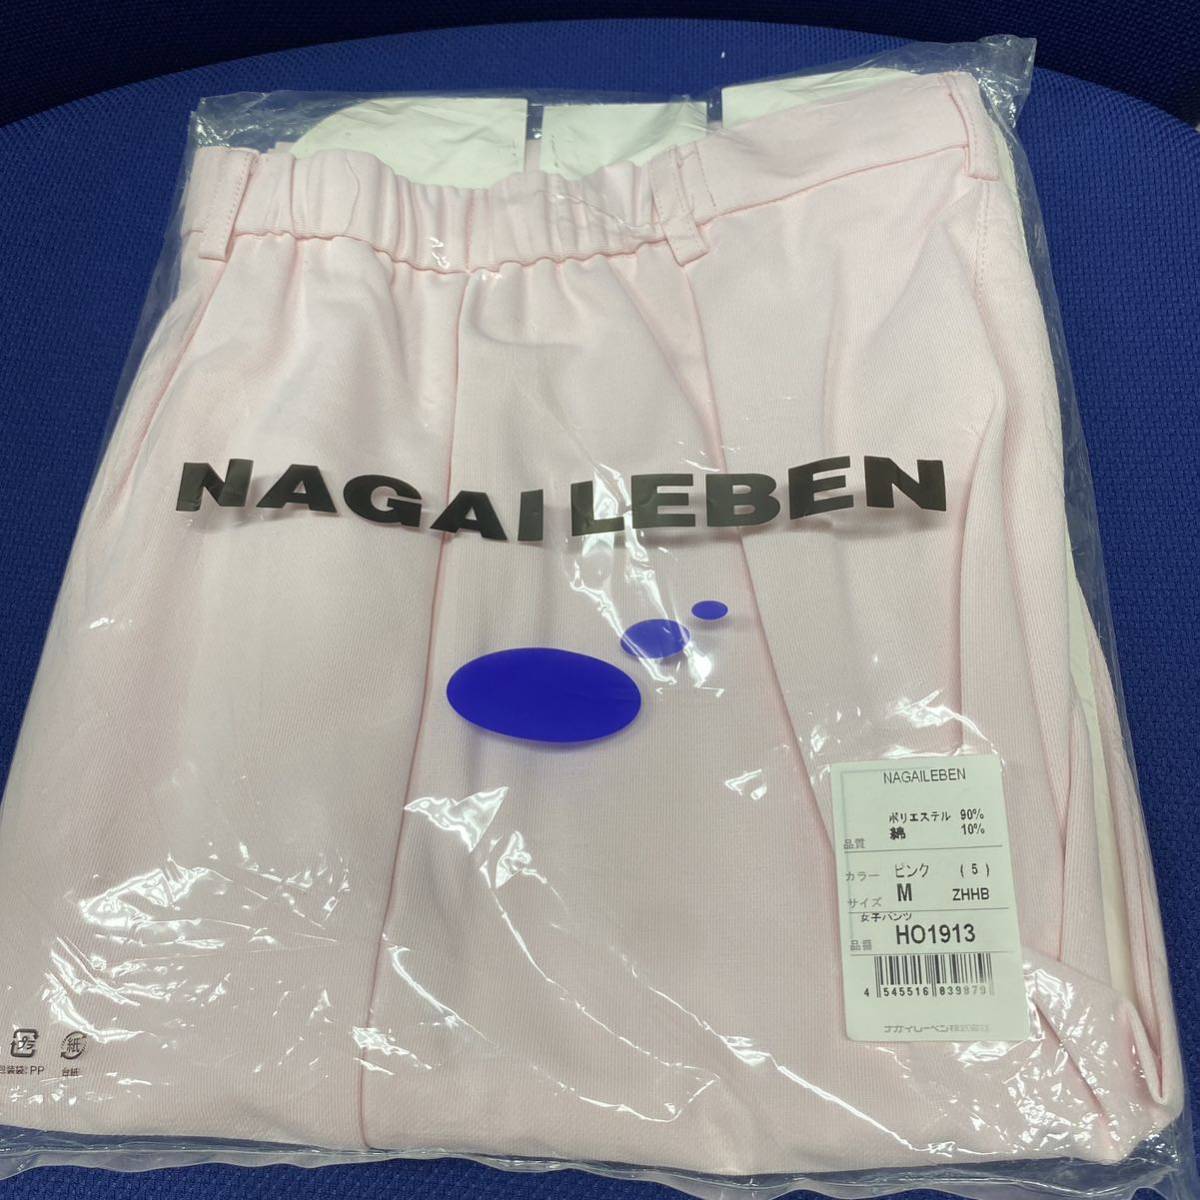 nagaire- Ben white garment lady's pants nurse wear nursing . helper pink M size 